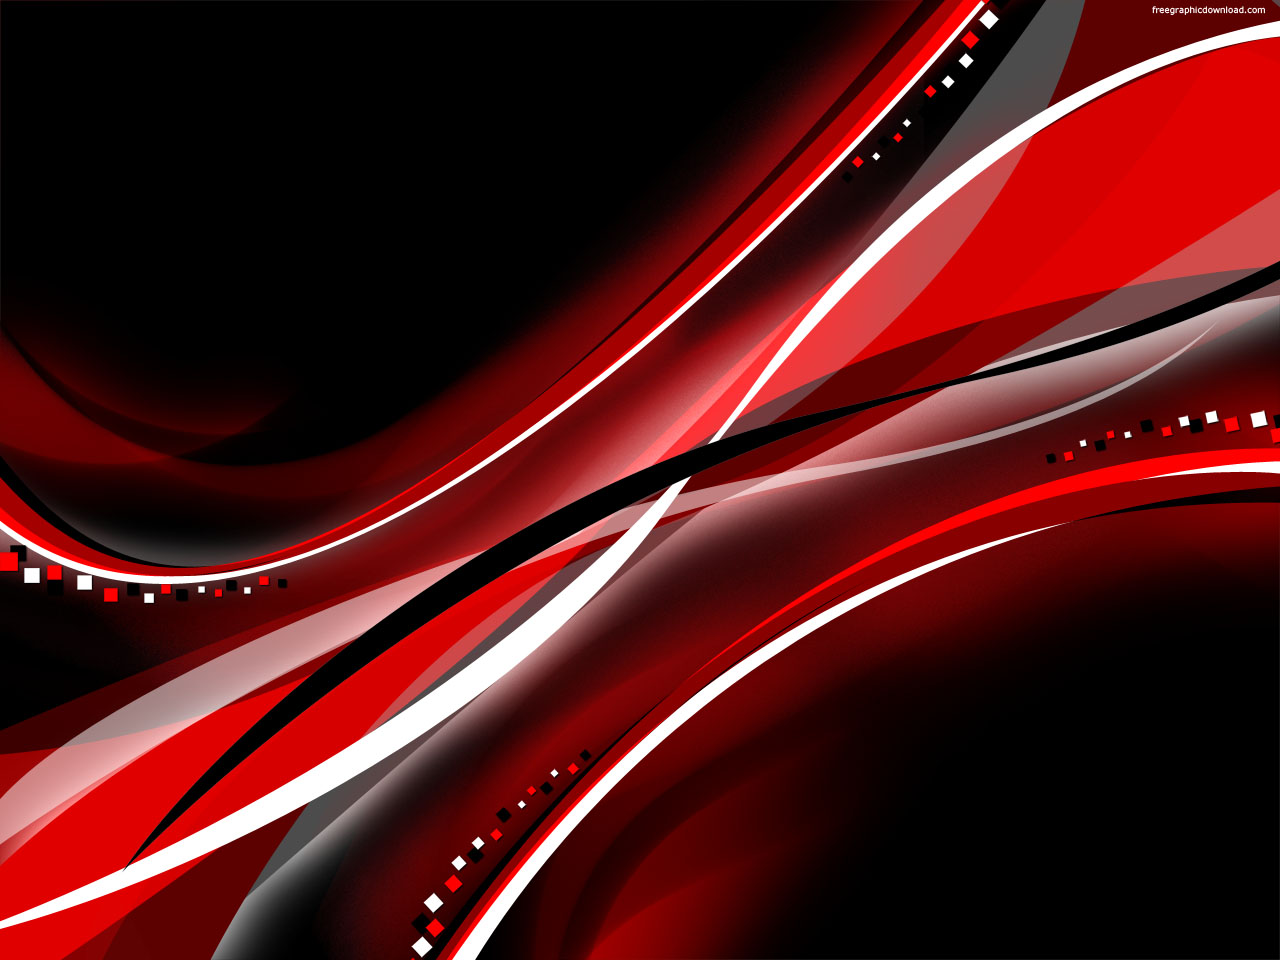 75+] Black And Red Abstract Wallpaper - WallpaperSafari